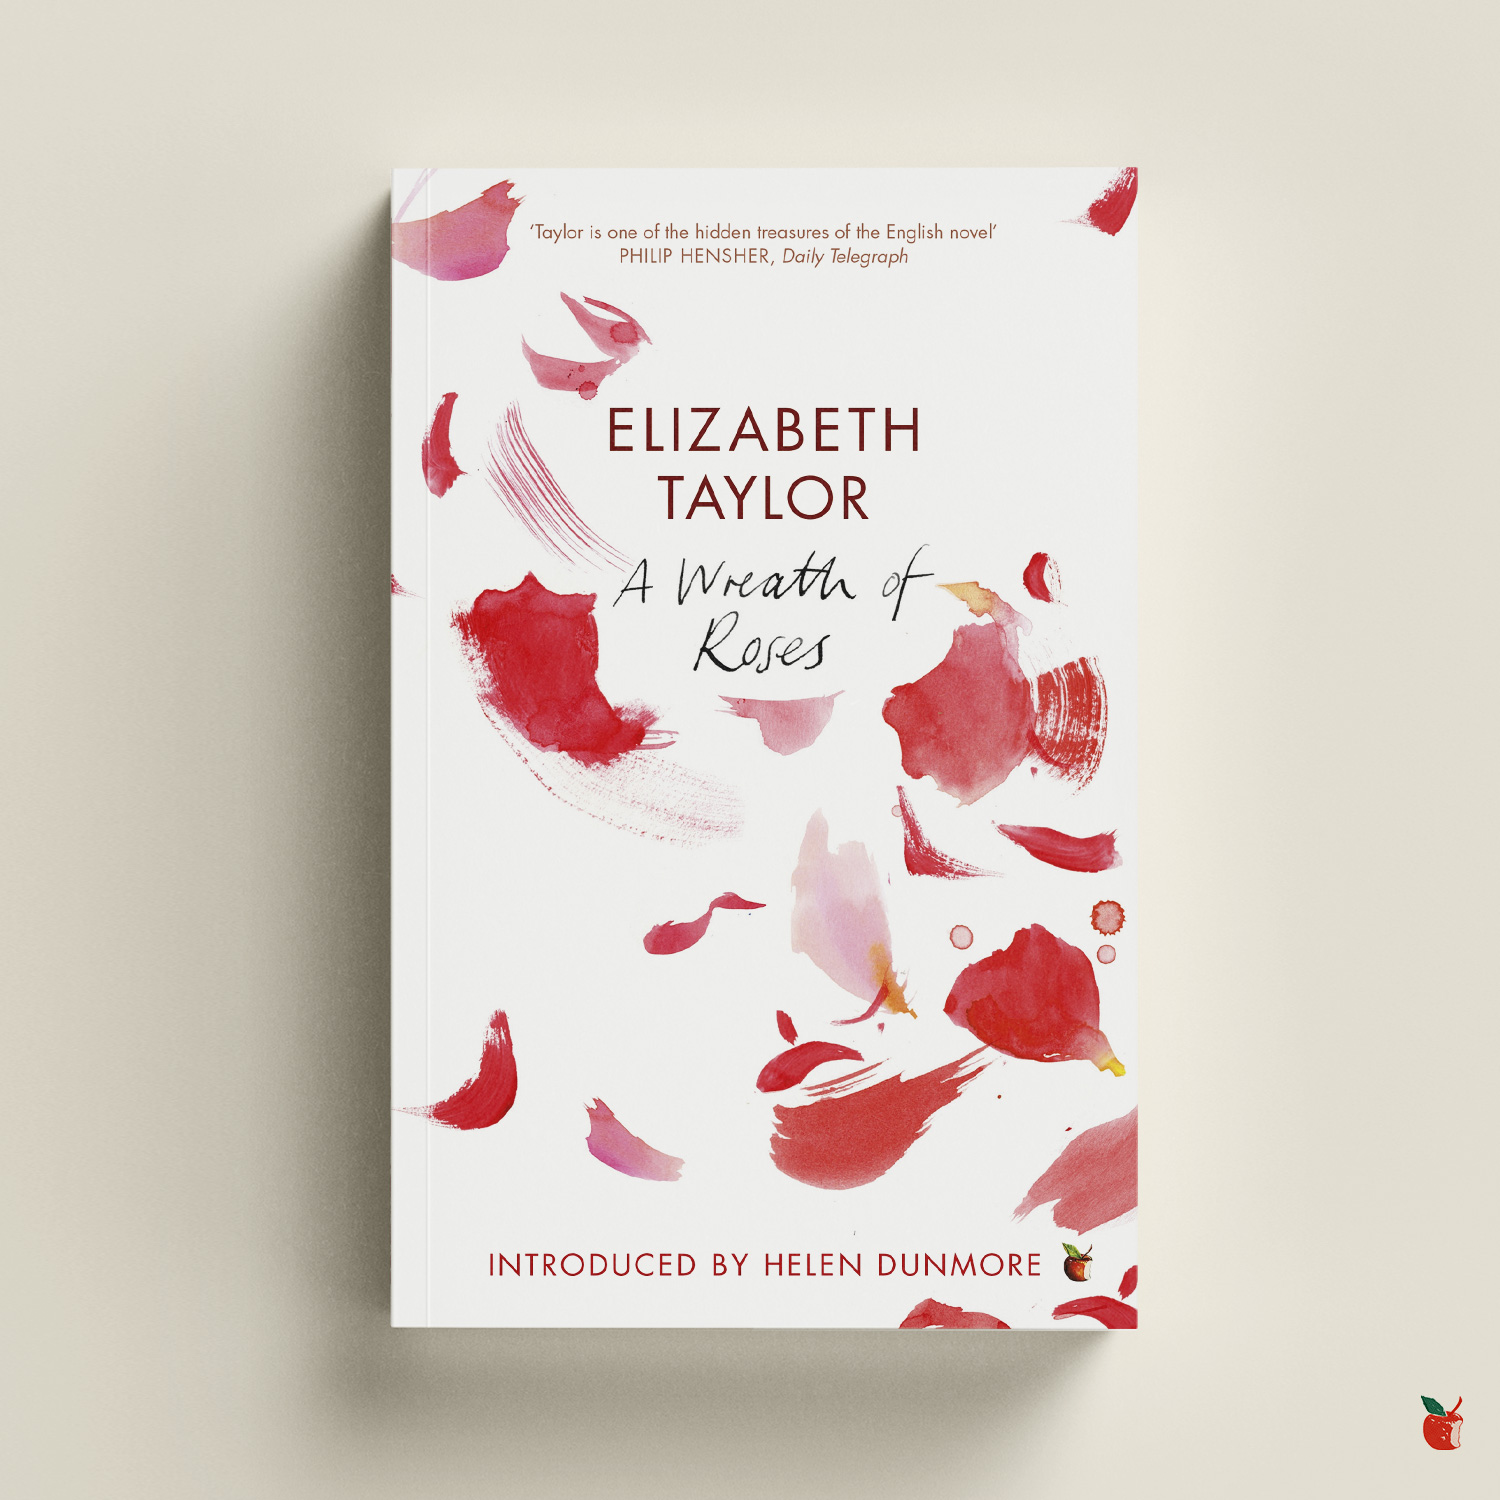 A Wreath of Roses by Elizabeth Taylor